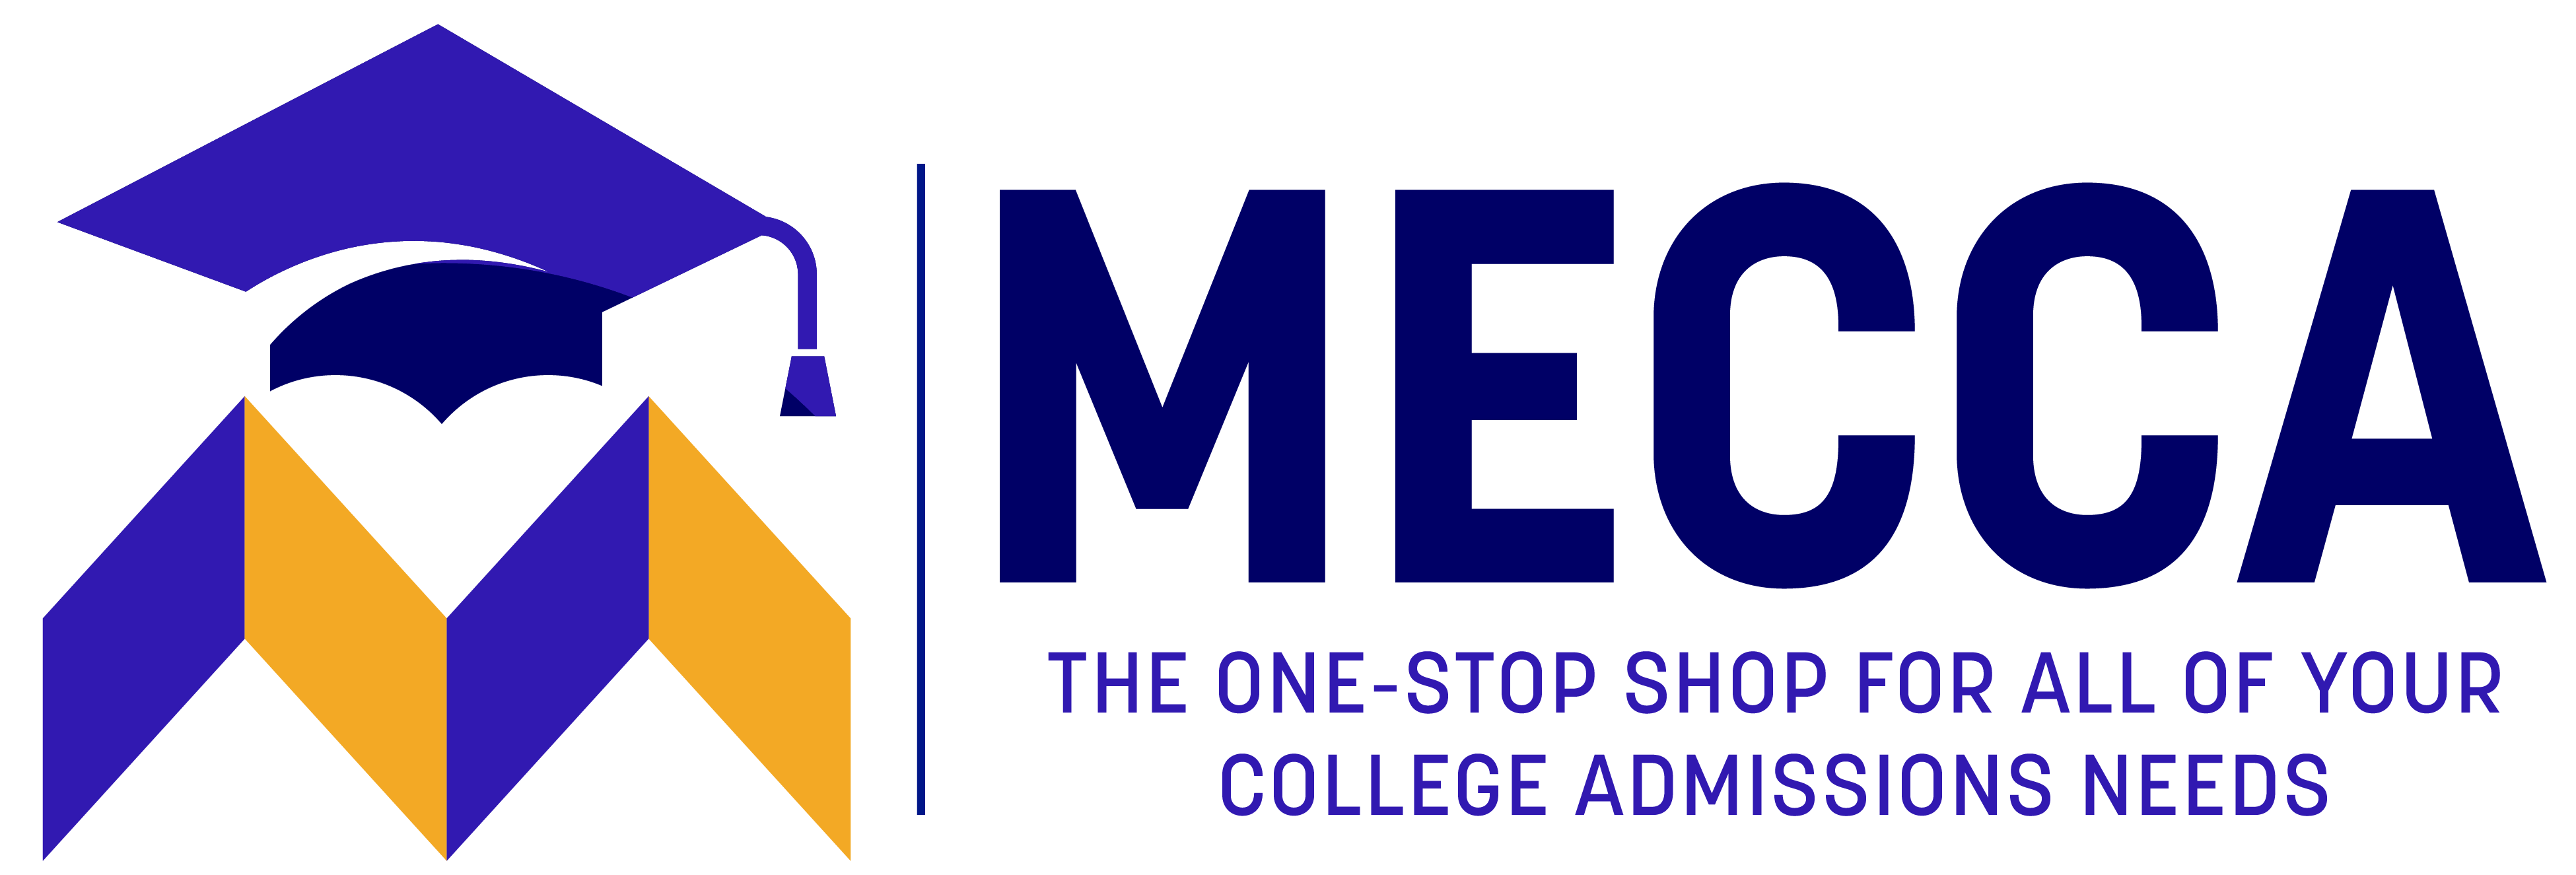 mecca site logo